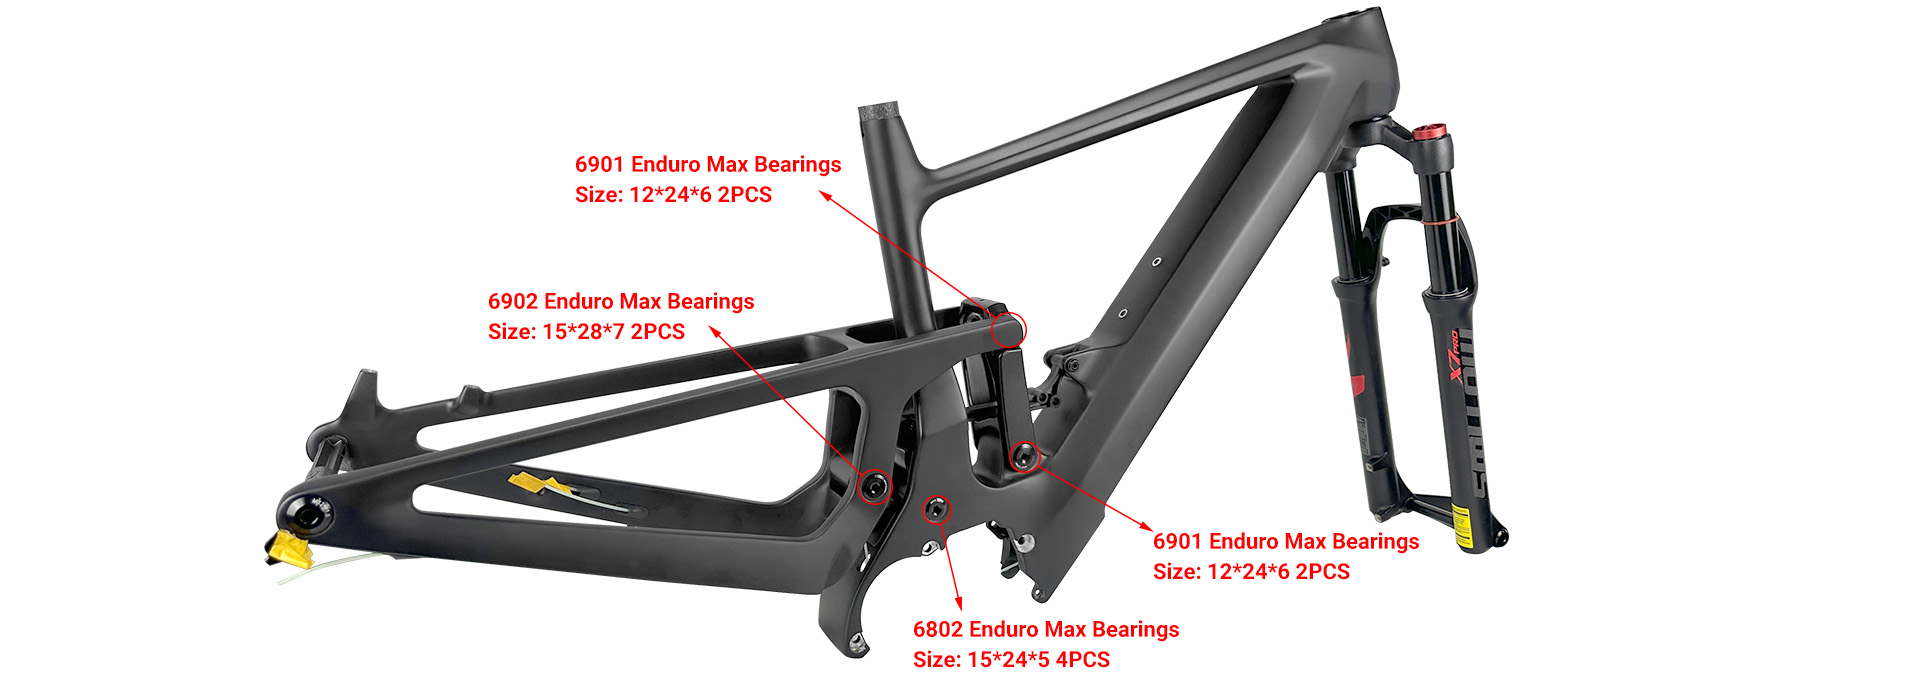 Enduro Max Bearings Used In LCE971 E-MTB Frame